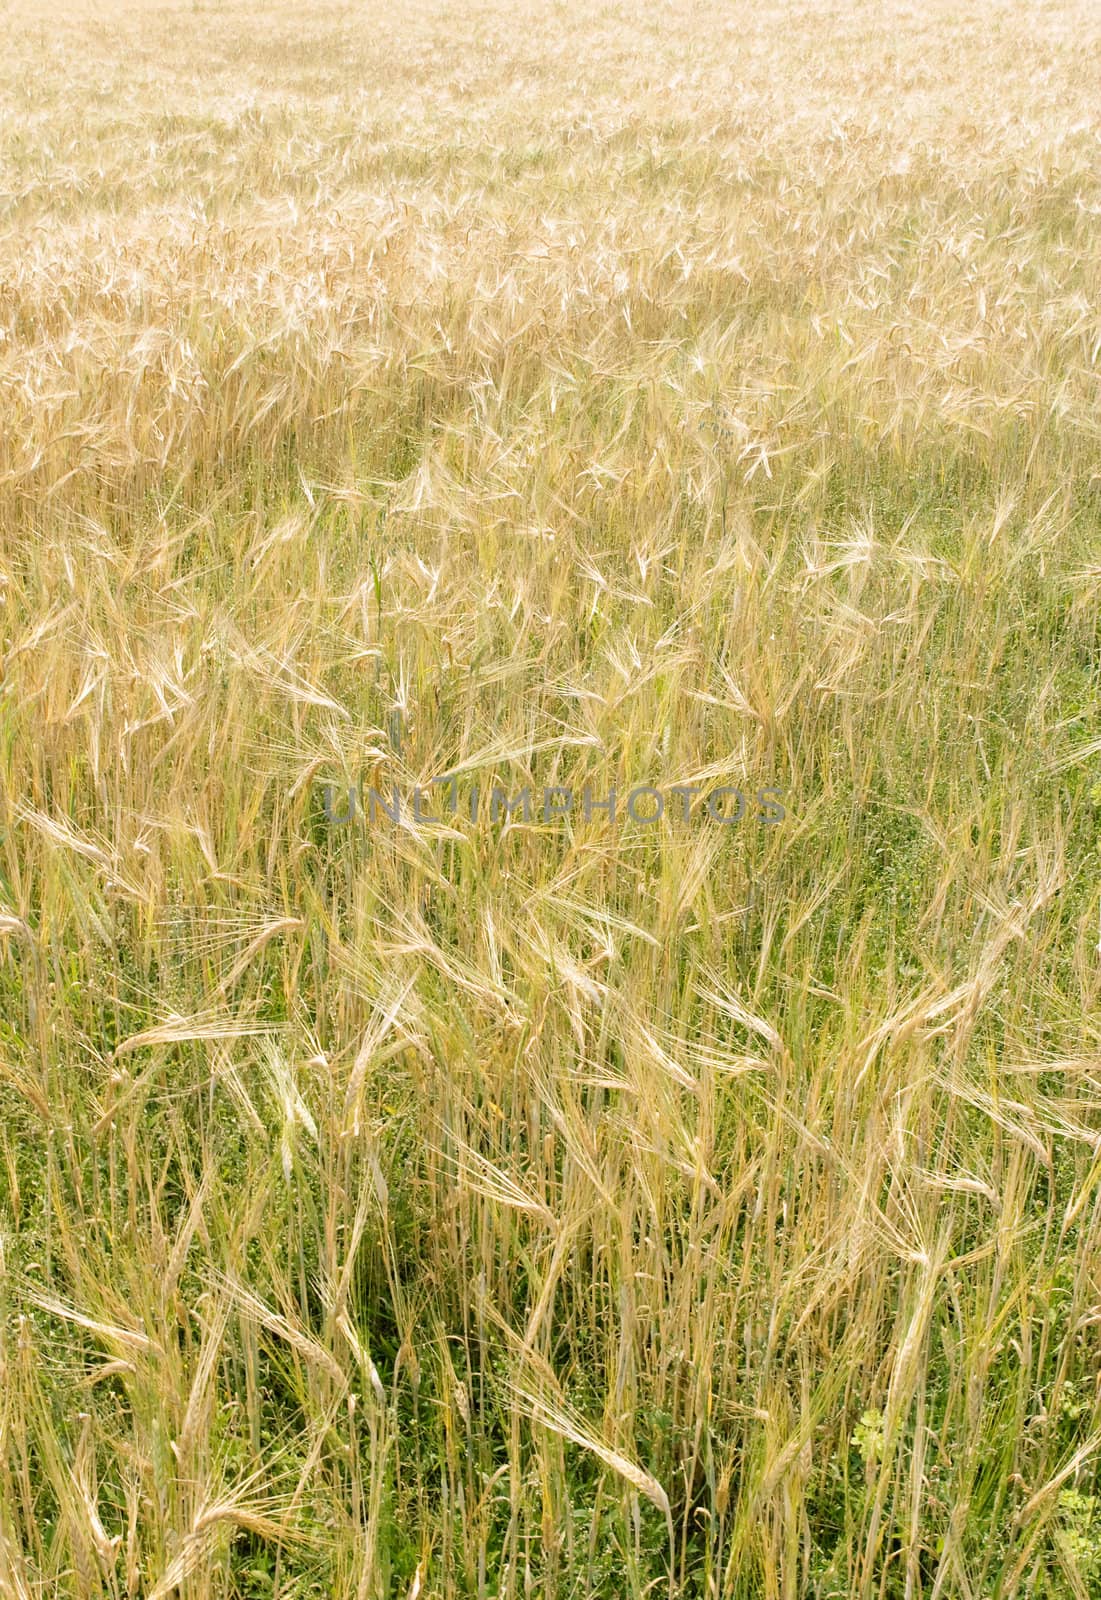 Gold Wheat Field by leaf